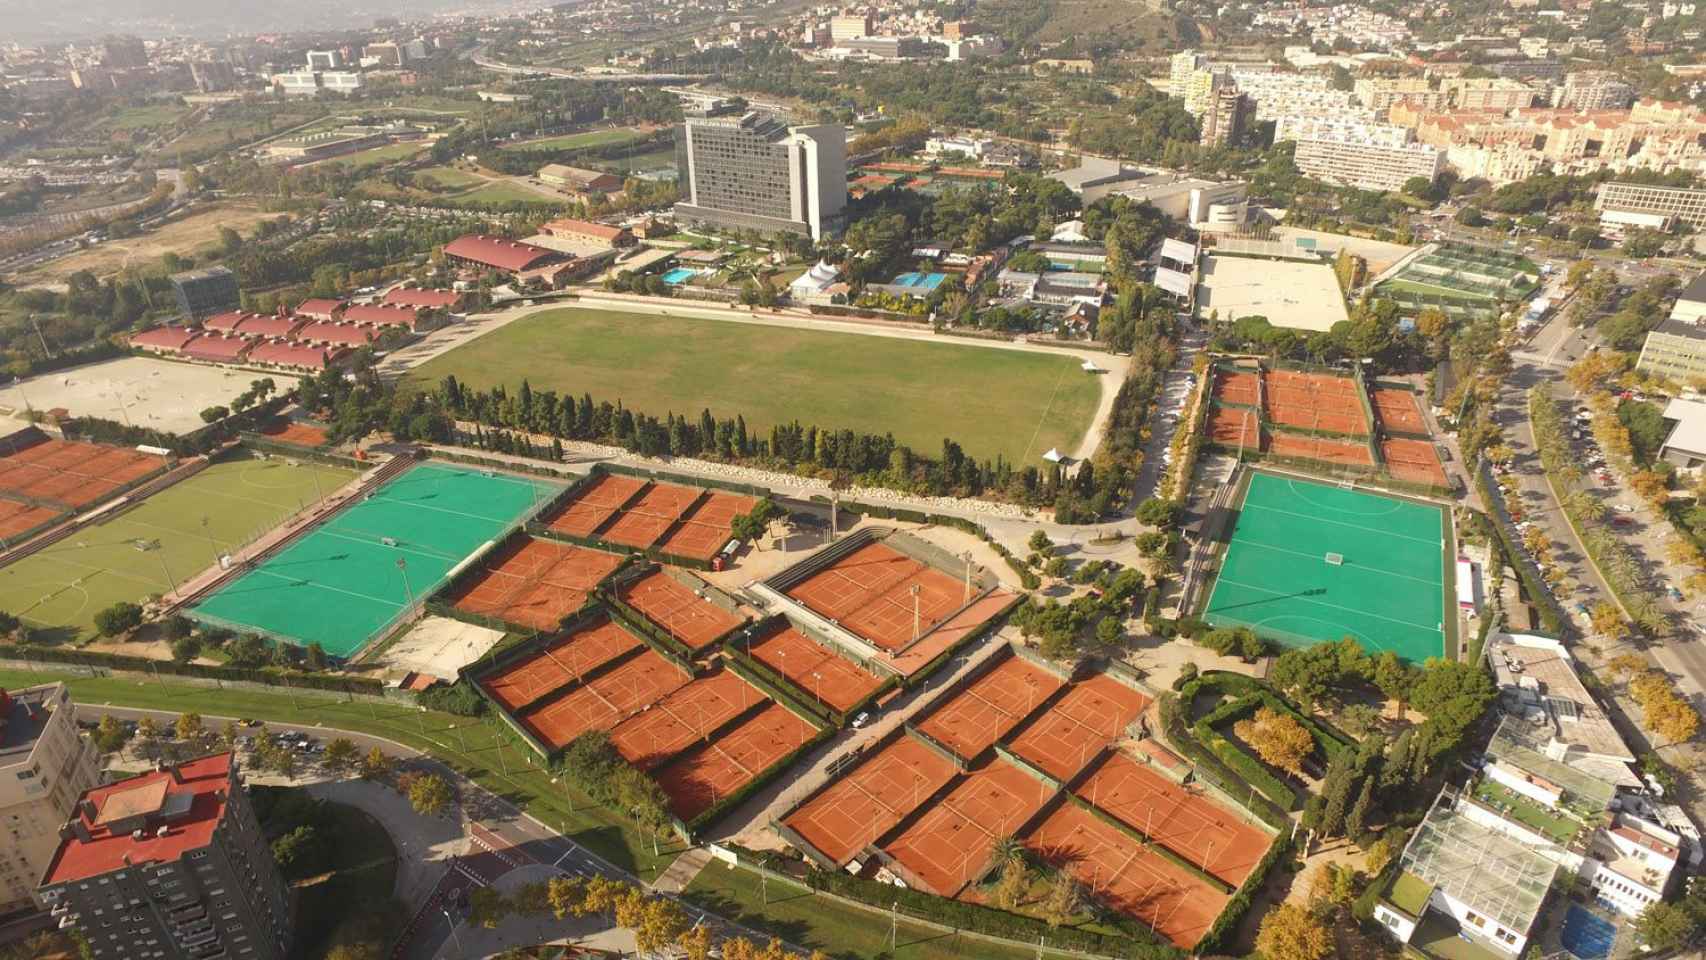 Vista panorámica del Real Club de Polo de Barcelona